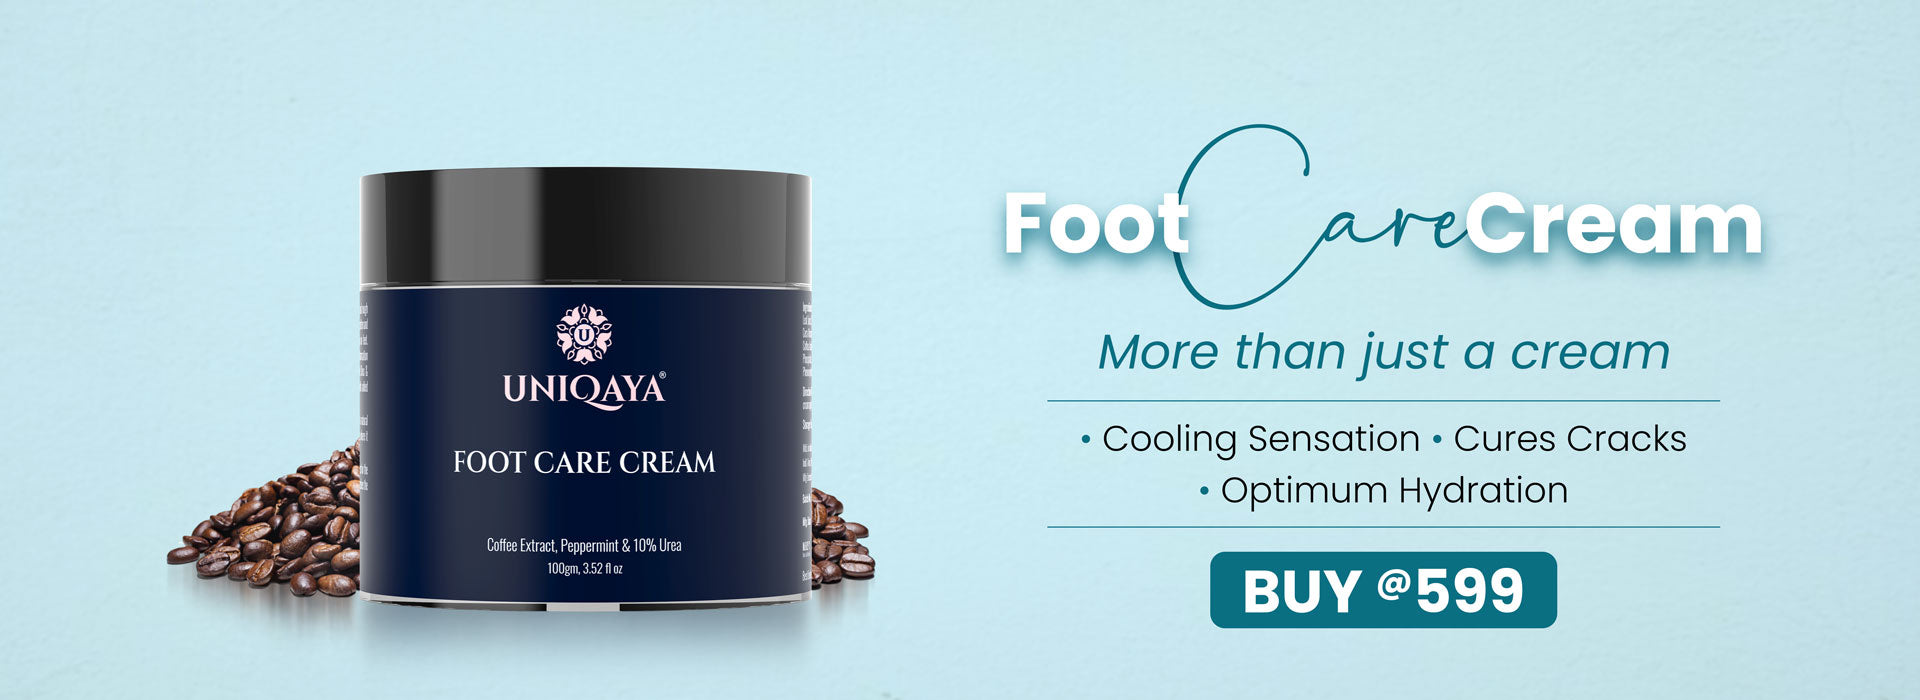 Uniqaya summer sale on foot care cream